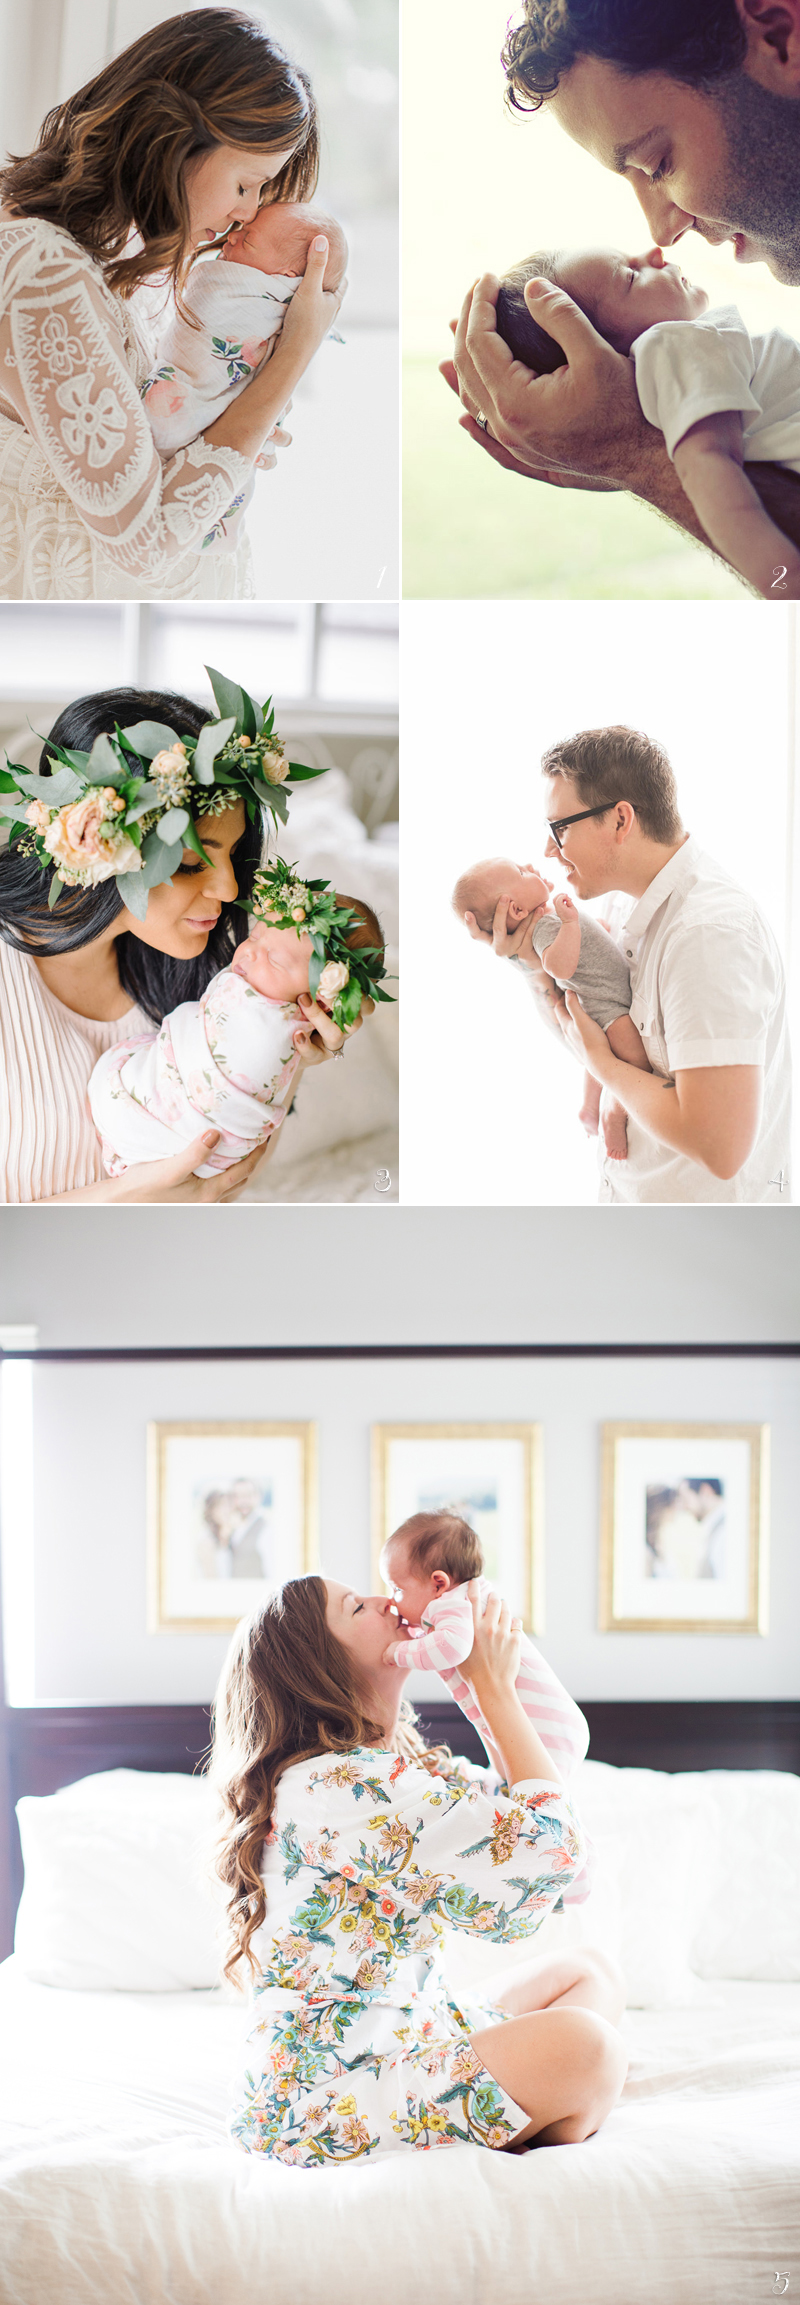 DIY newborn photos part 3: posing with family members (mom & dad)